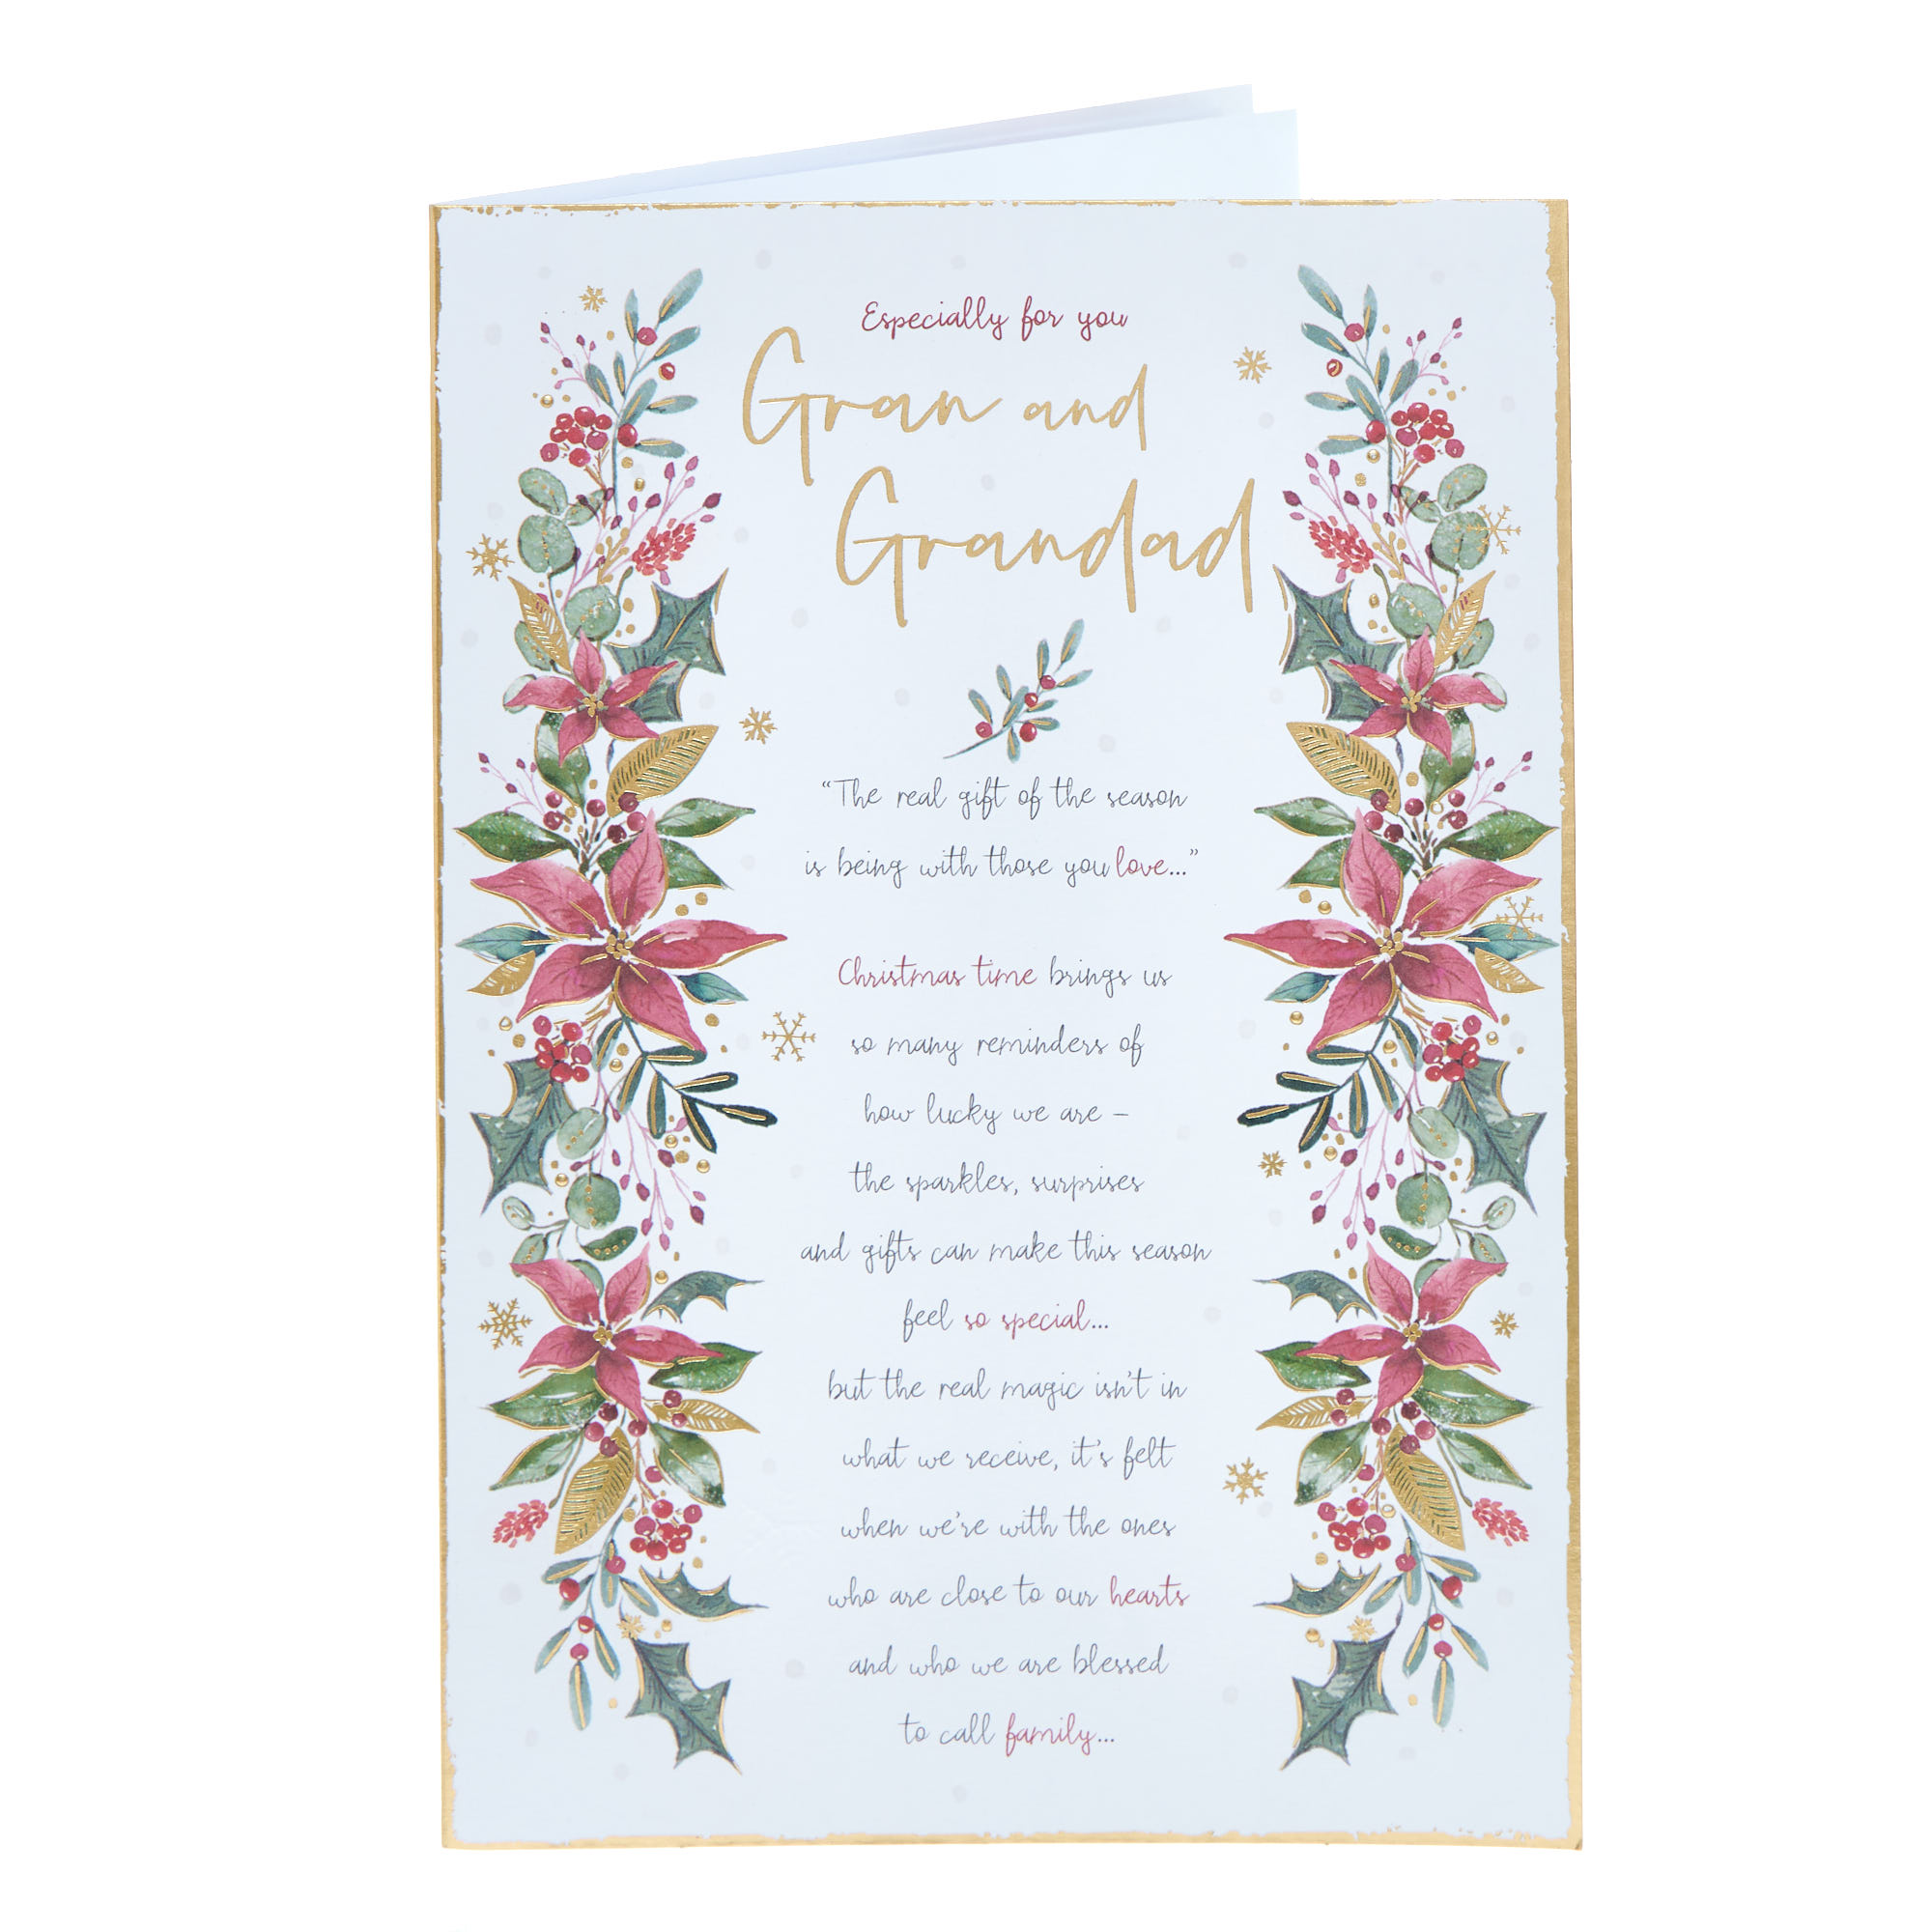 Gran & Grandad Verse Poinsettia Christmas Card